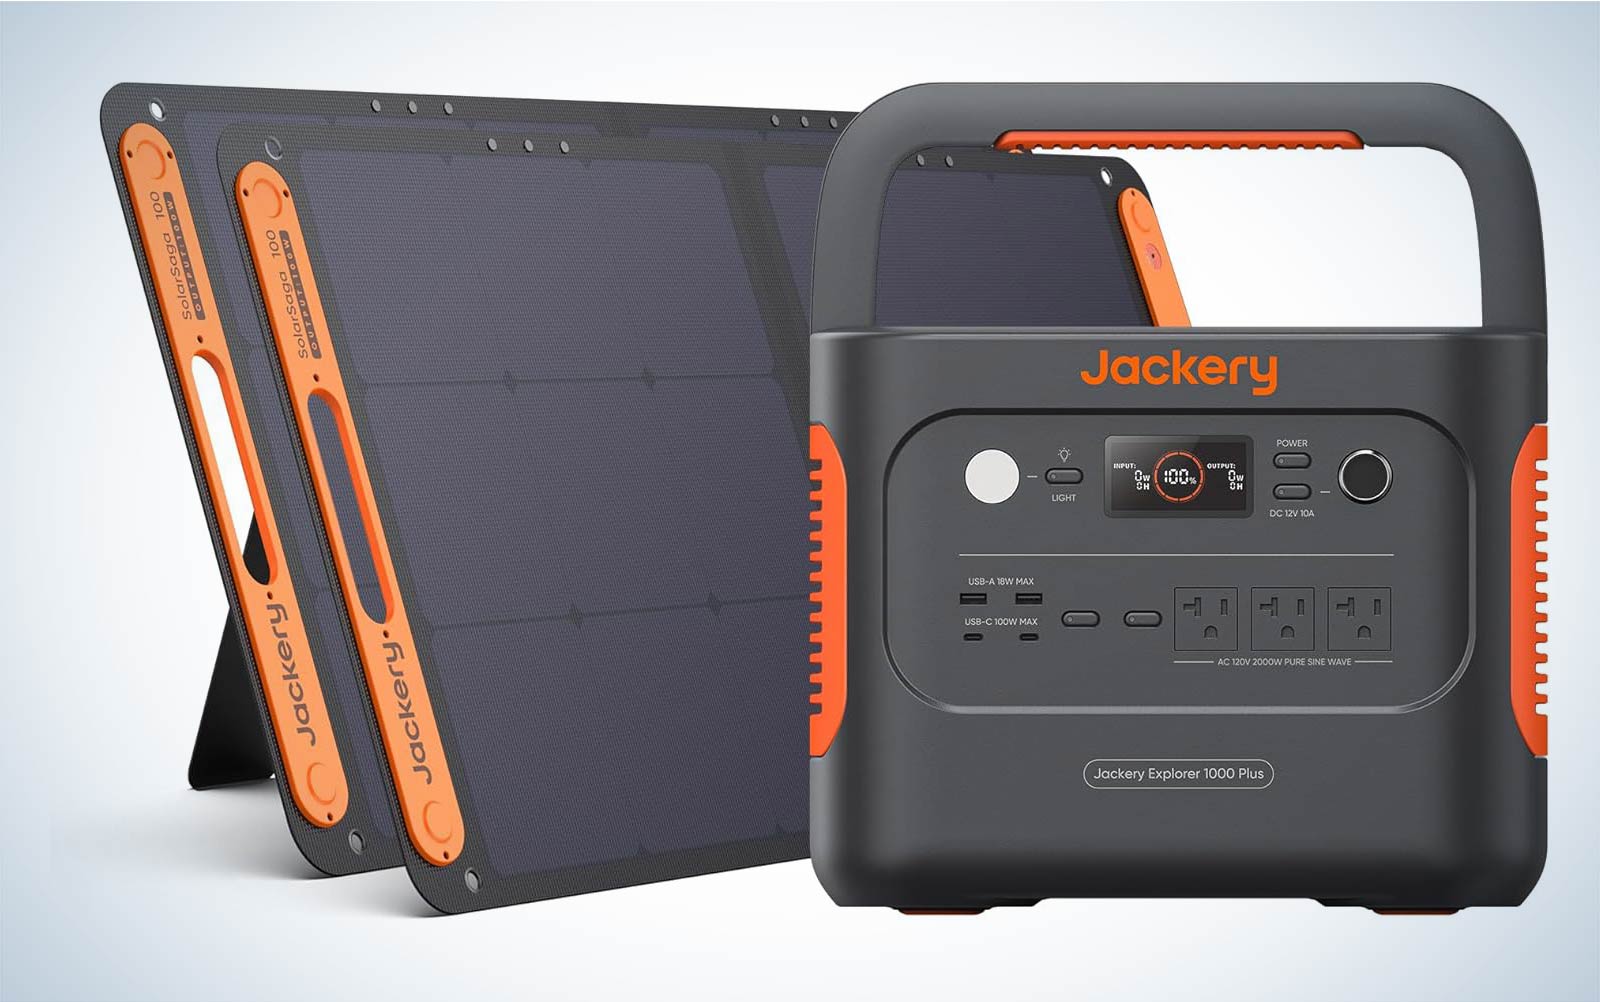 Jackery 1000 Plus Solar Generator on a plain background